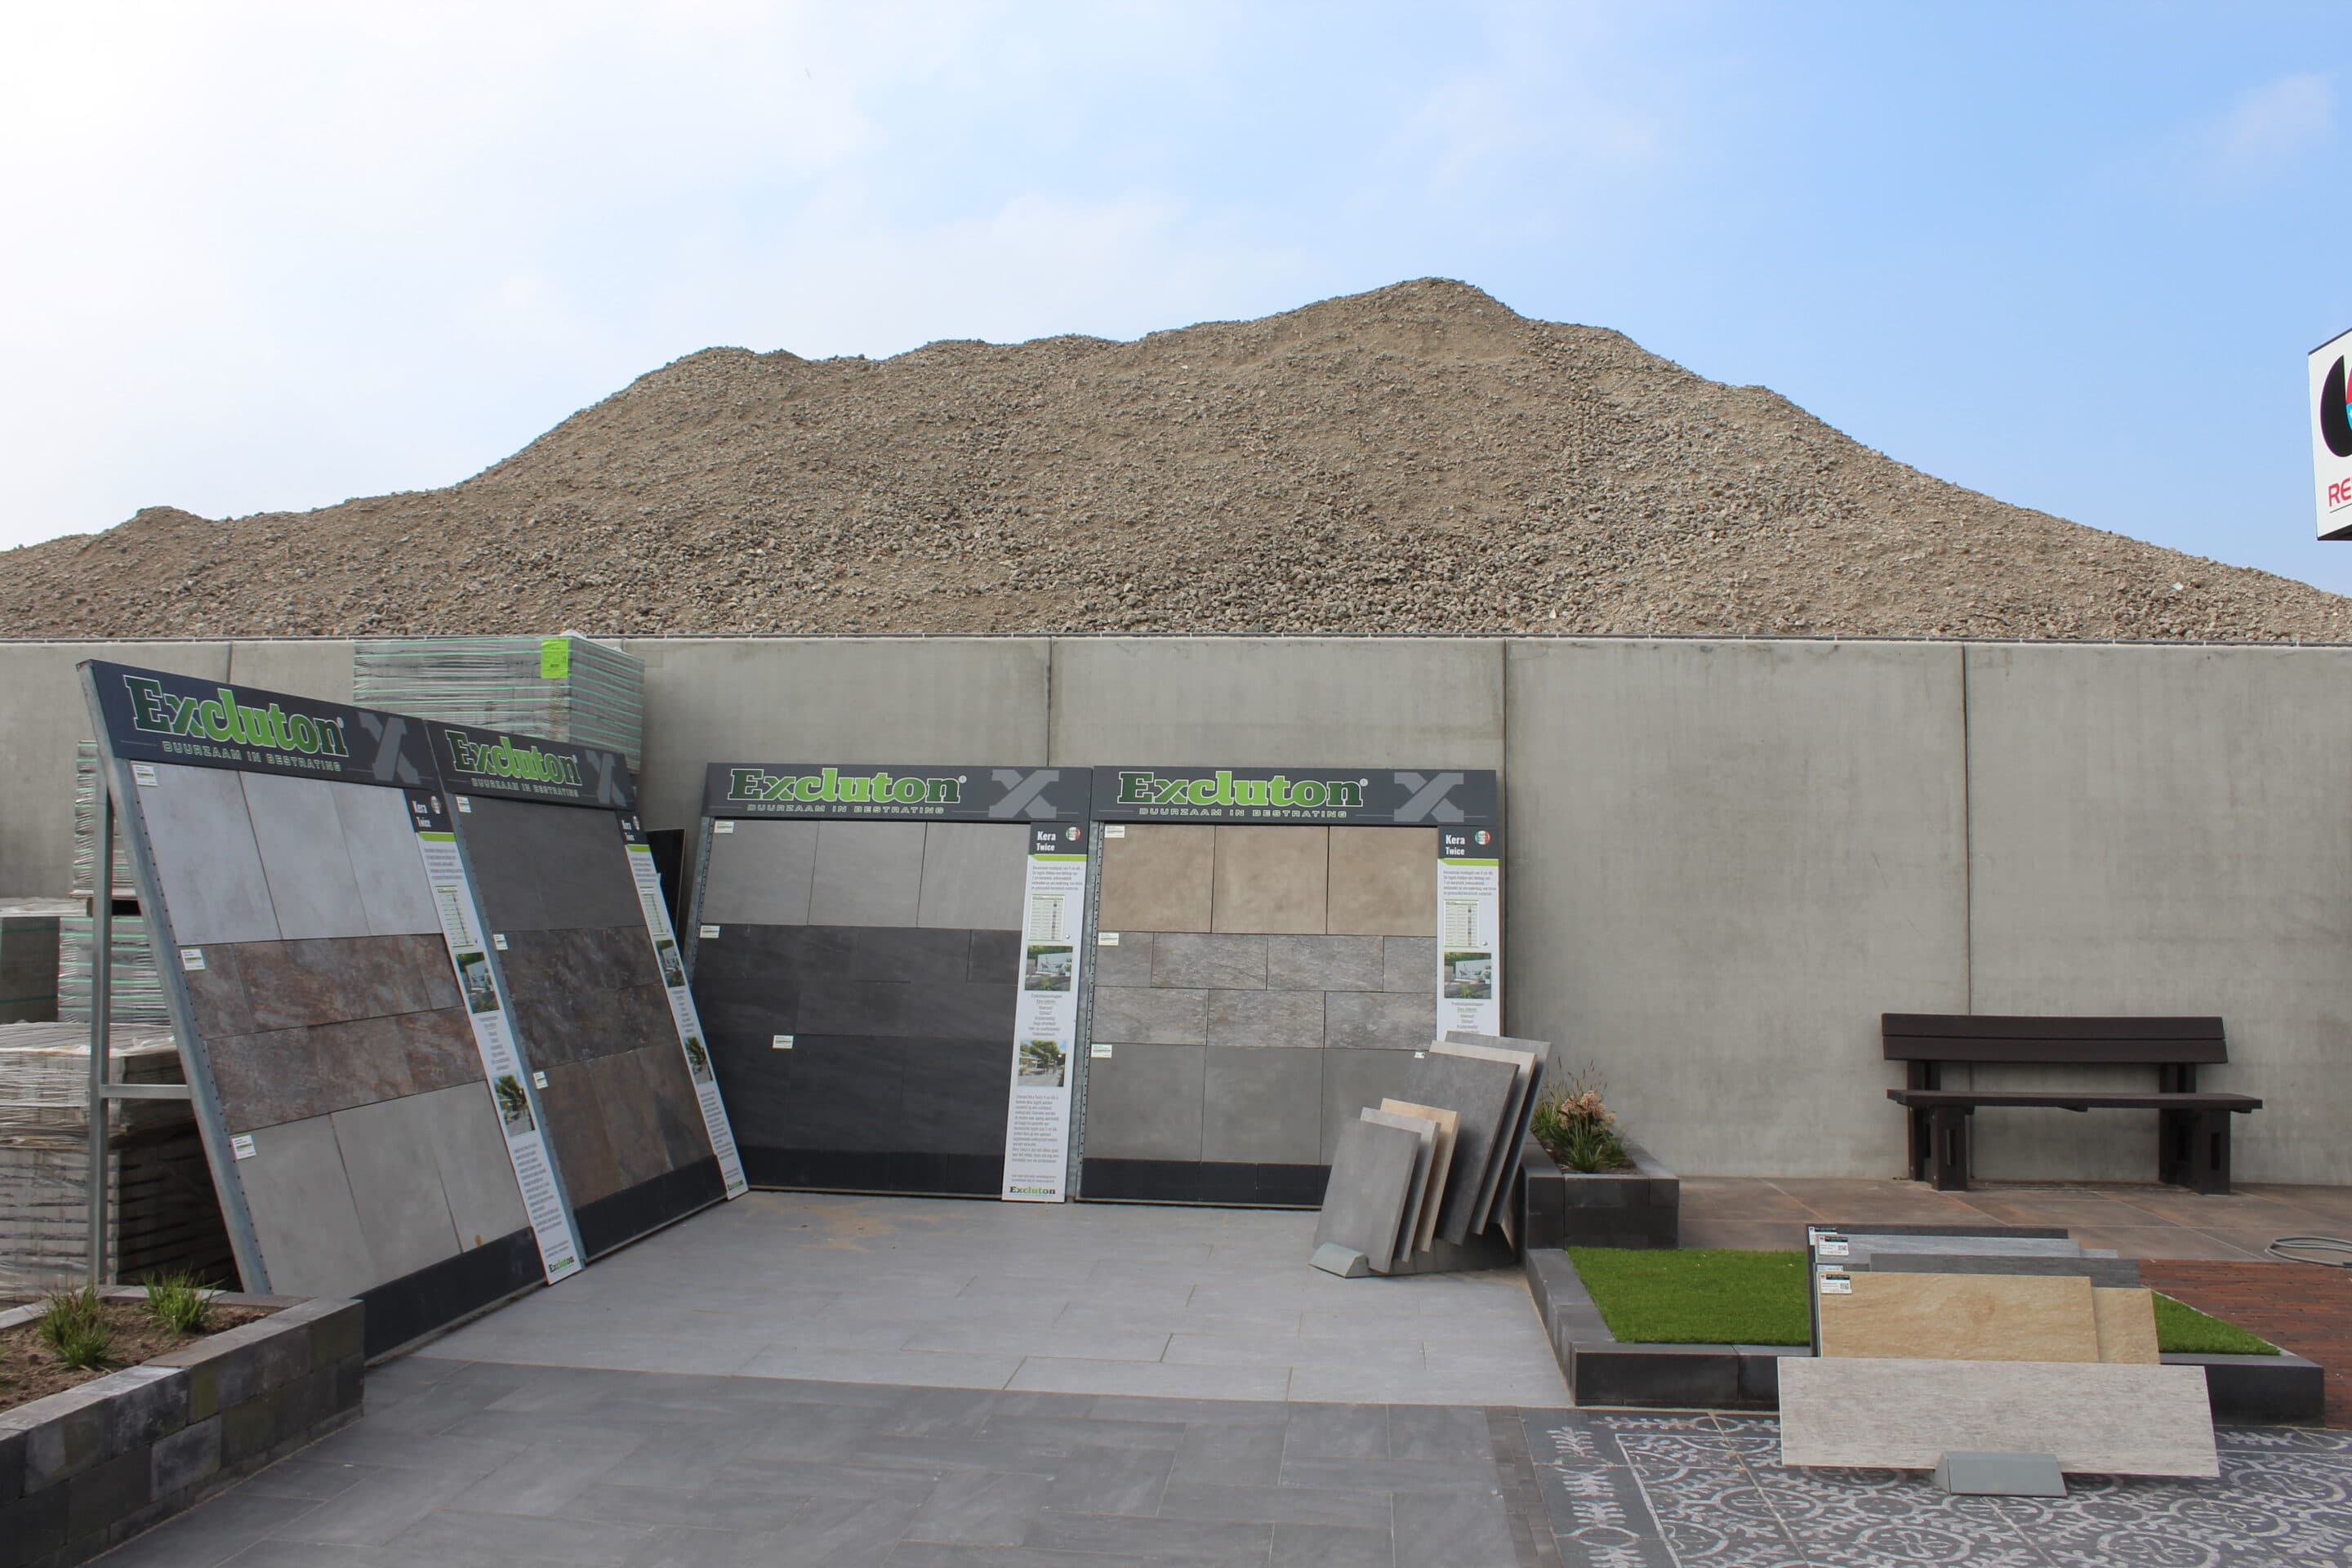 Bosch Beton - Opslagvakken voor zand, grind en grond in Oss